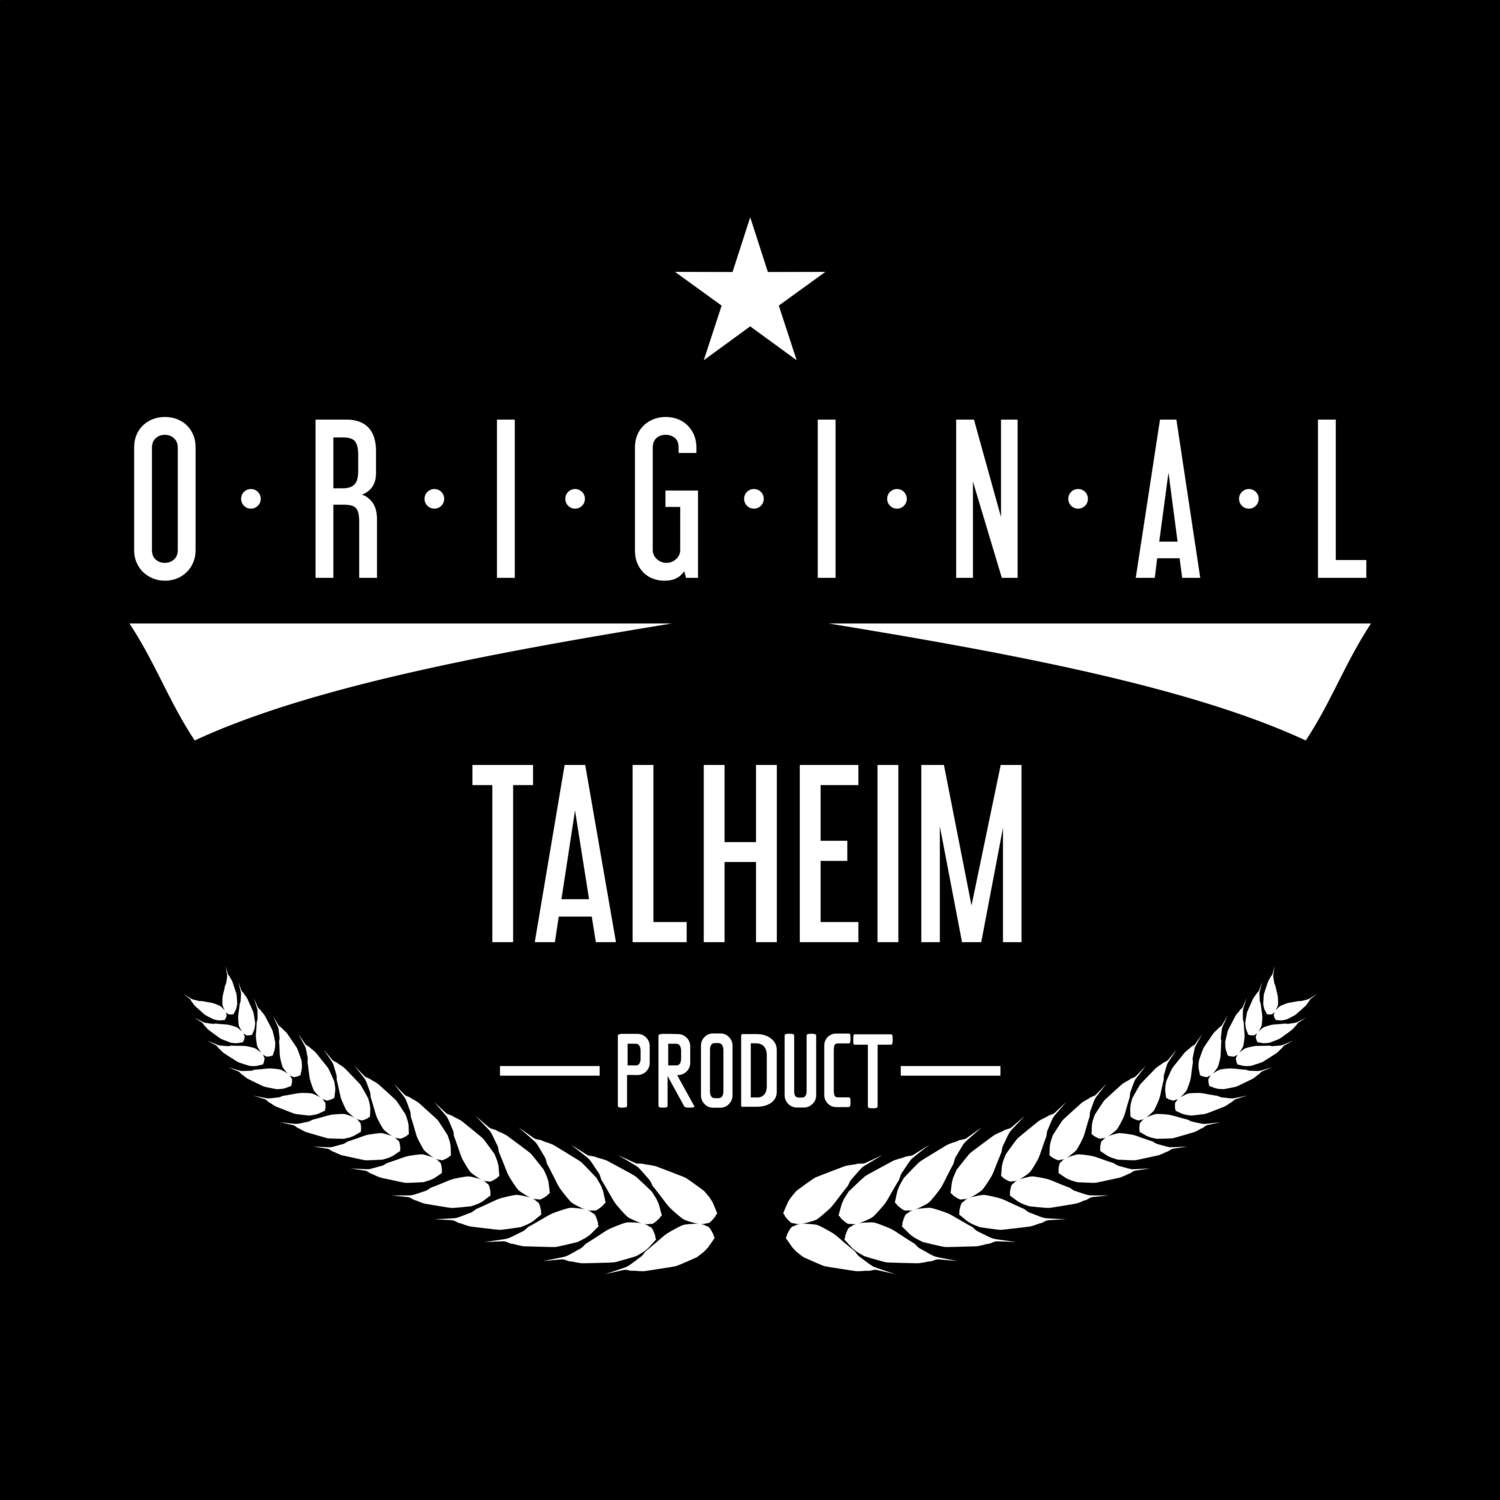 Talheim T-Shirt »Original Product«